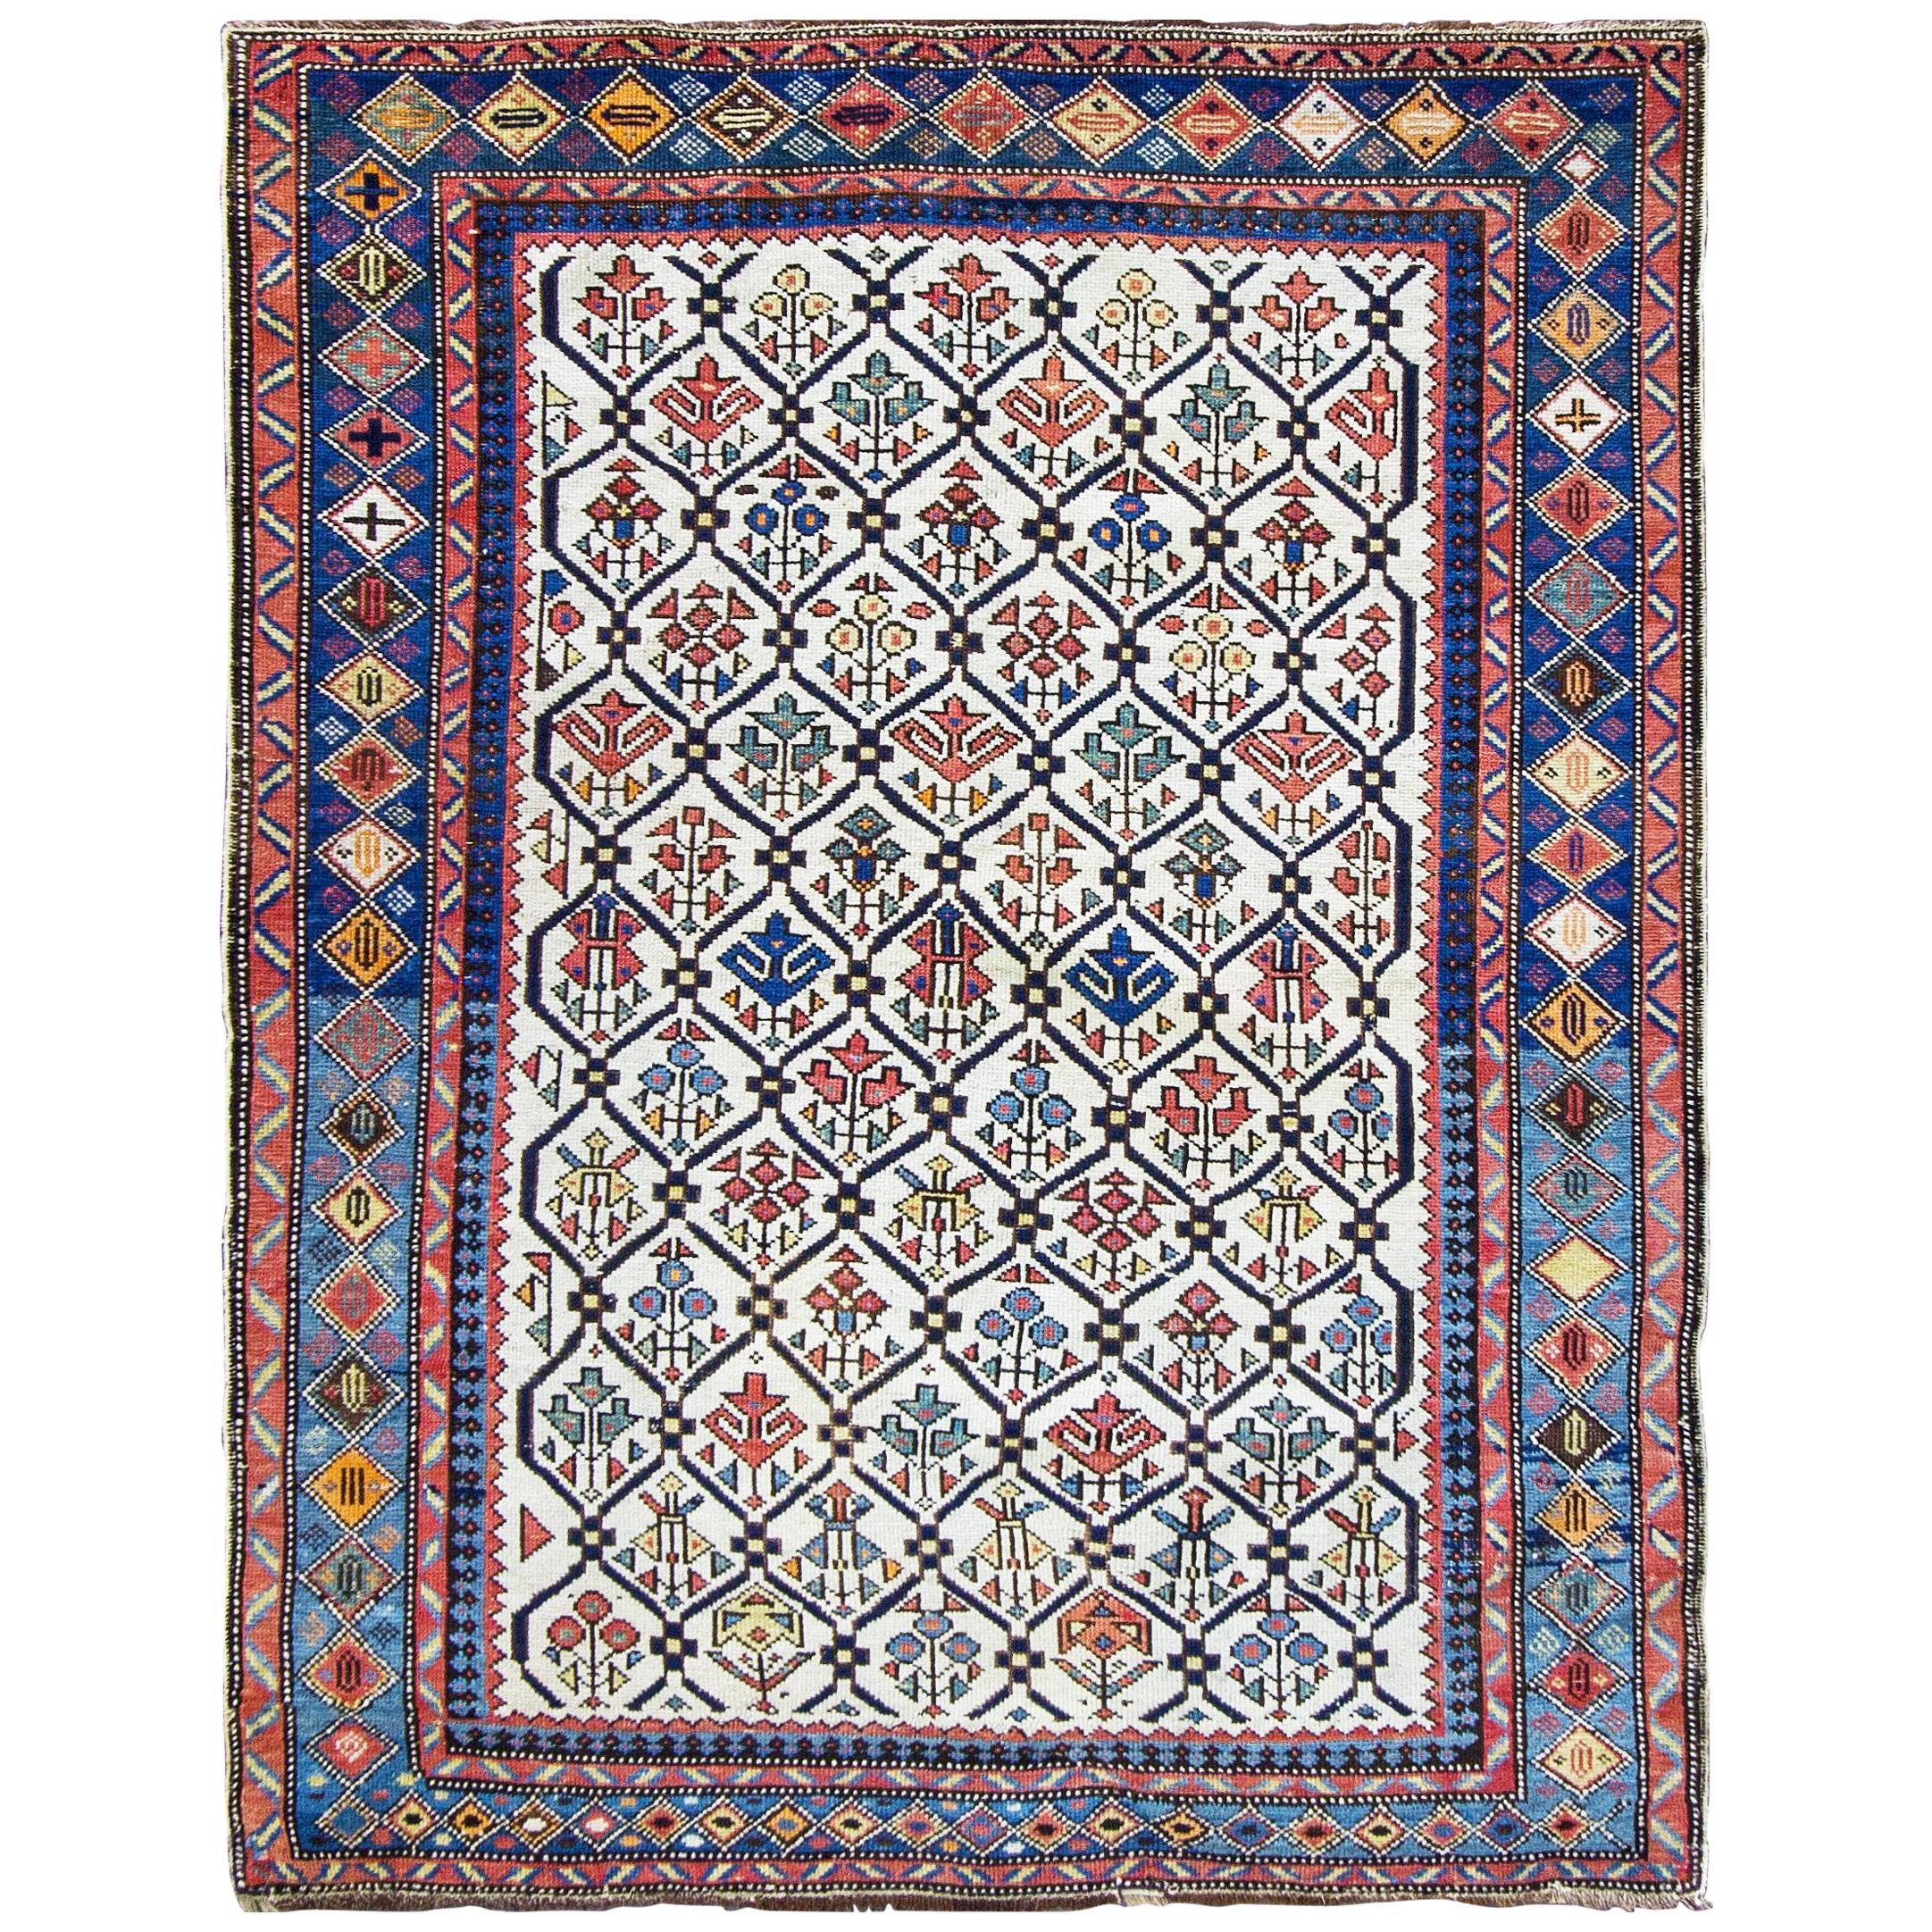 Antique Caucasian Shirvan/ Kazak Rug, 3'6" x 4'7" For Sale